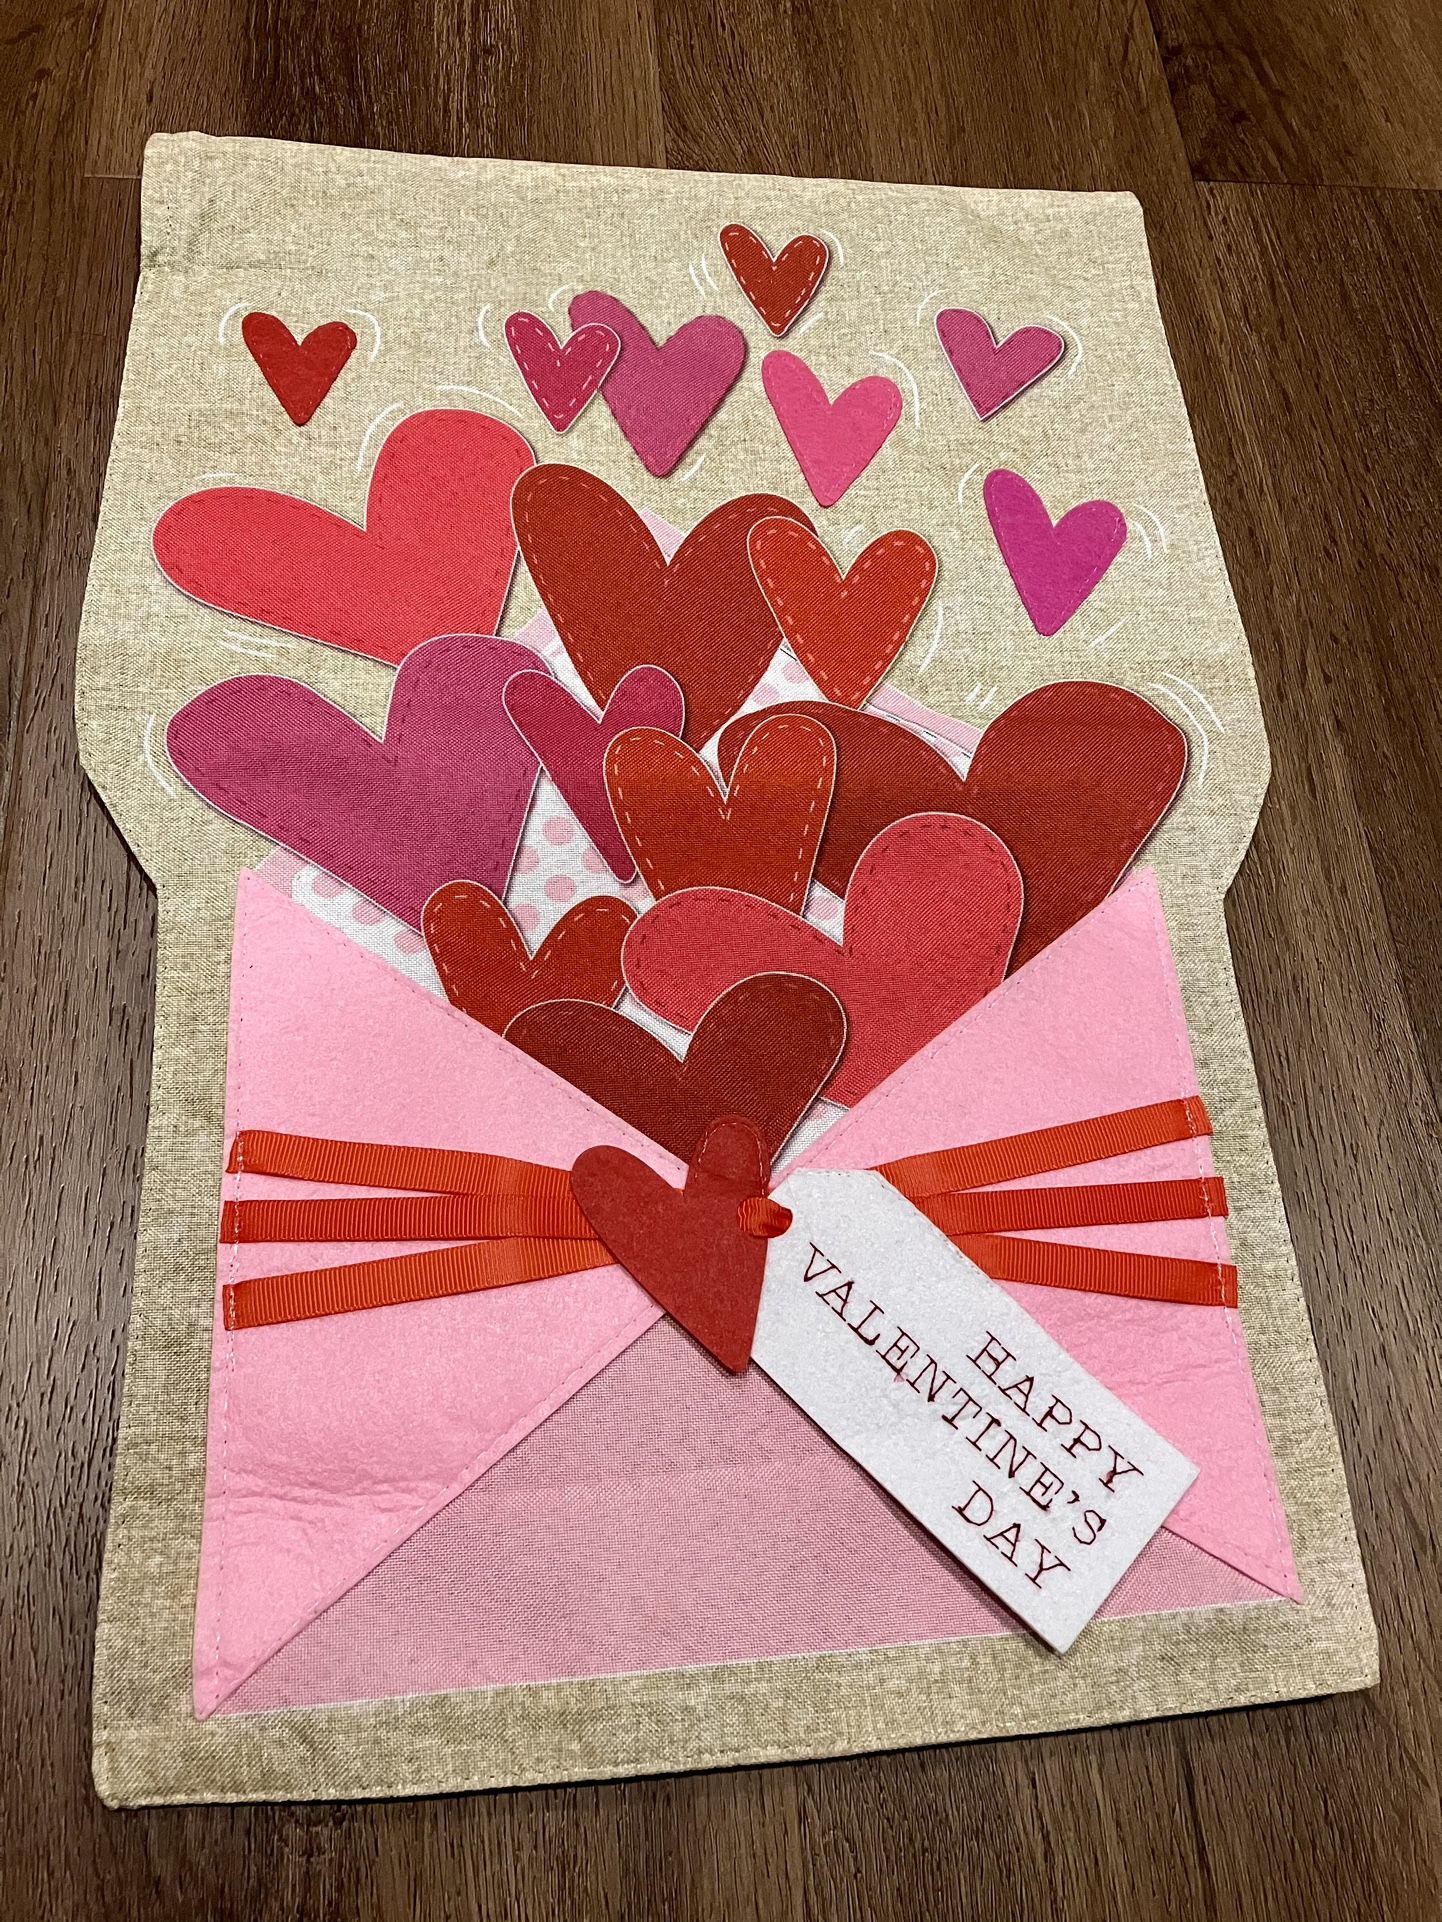 Happy Valentine's Day Garden Flag 18” x 12.5” Hearts 3-D Felt & Ribbon Details Holiday Yard Decor 